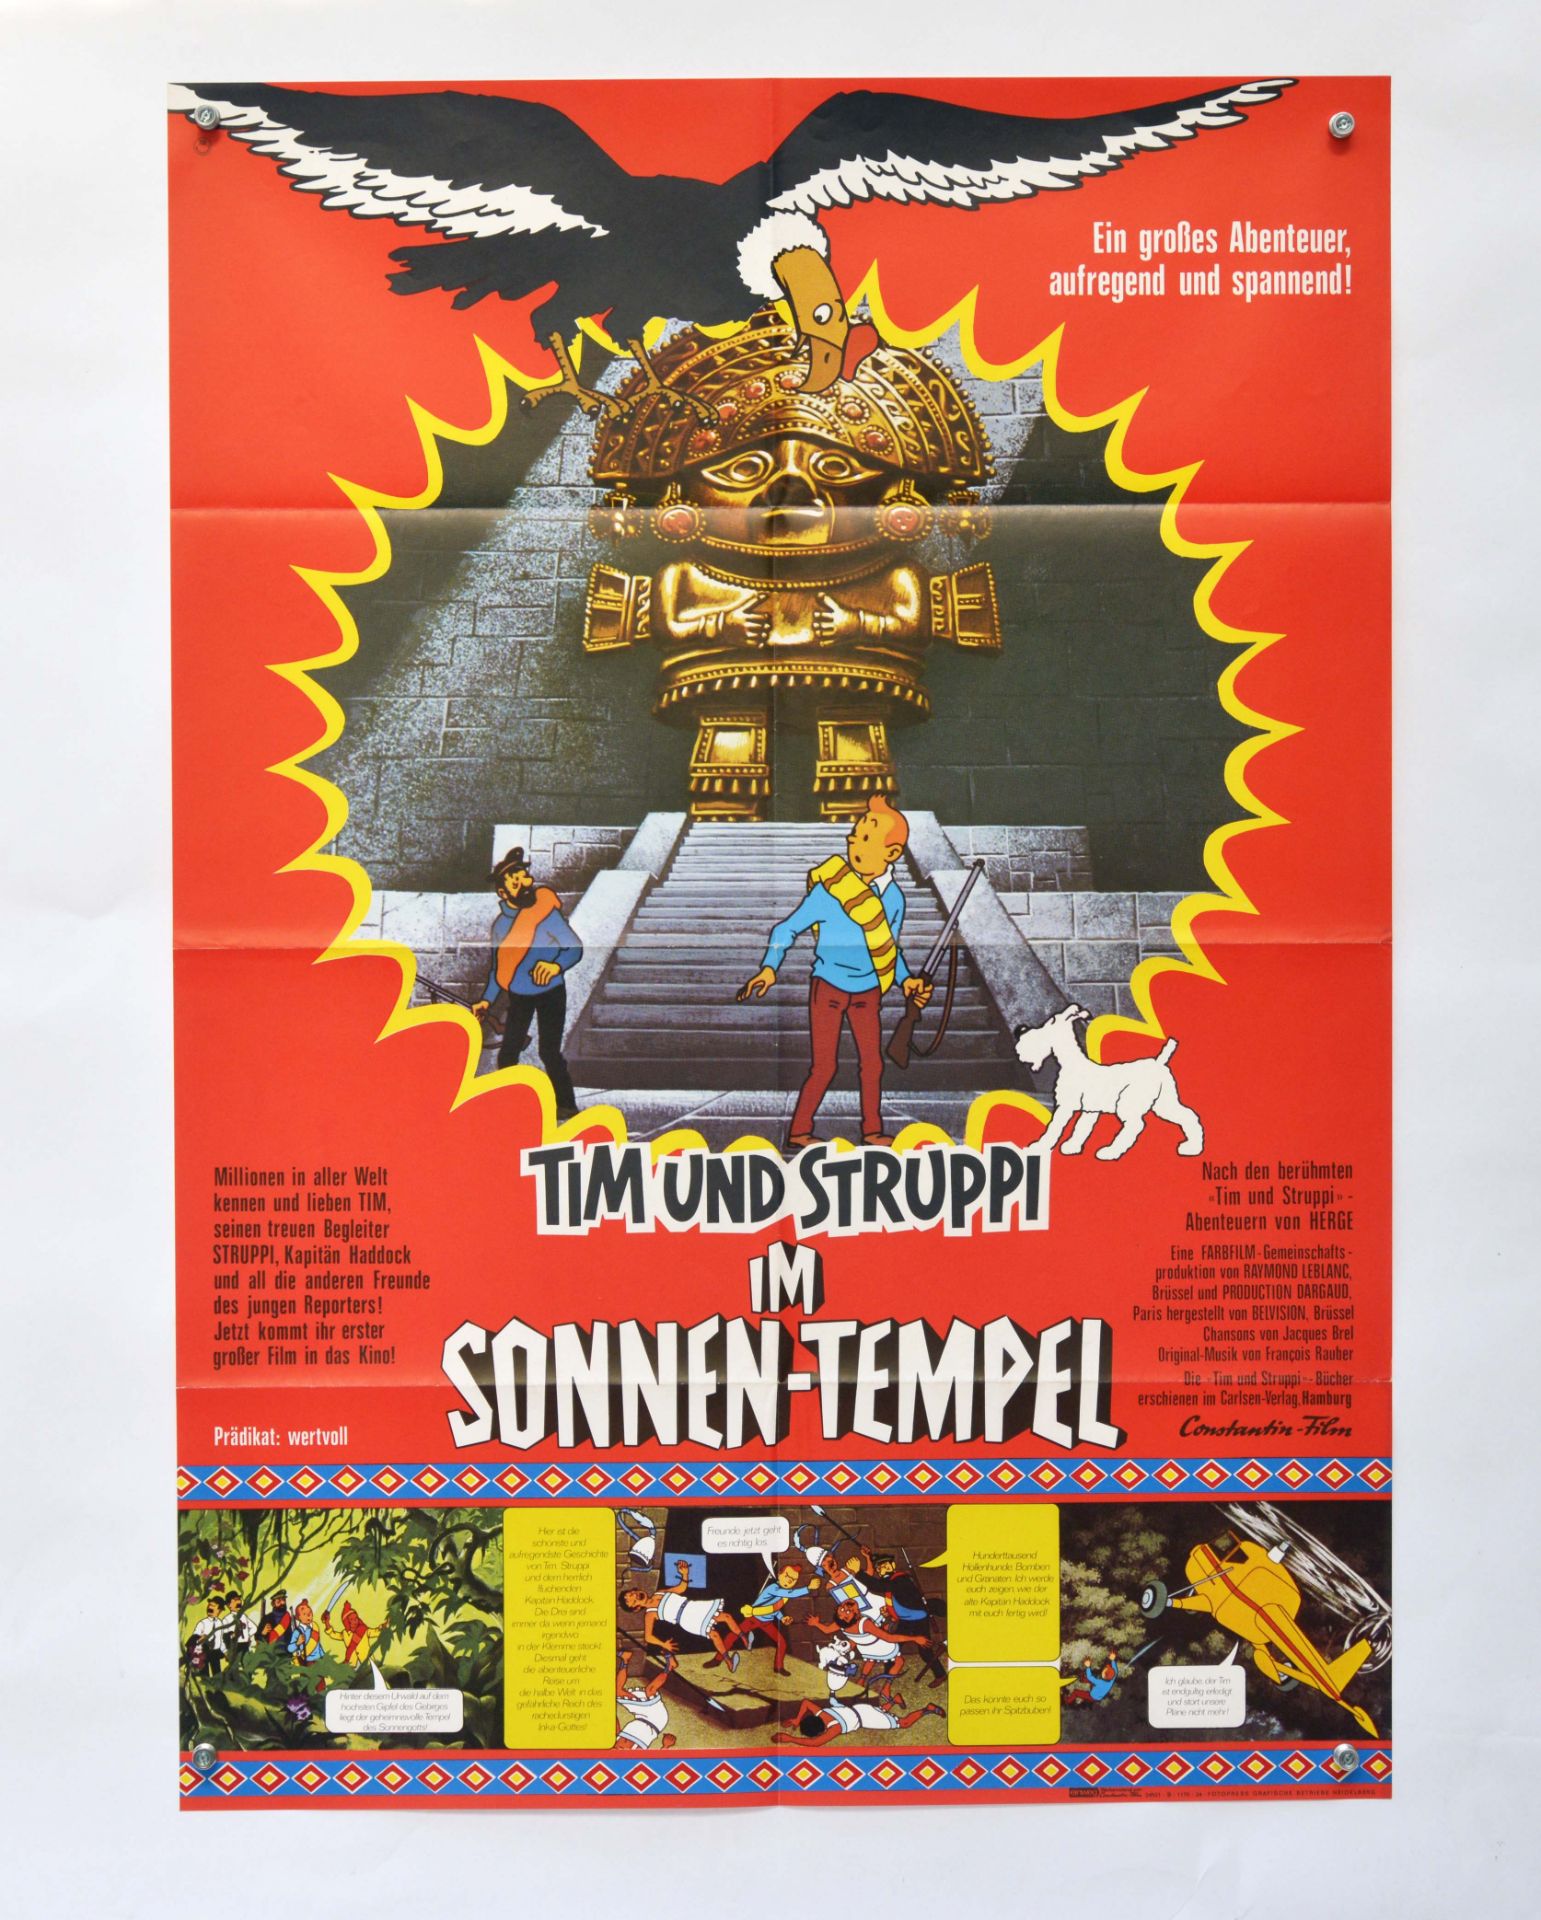 Film Poster "Tim und Struppi", folds, otherwise very good condition